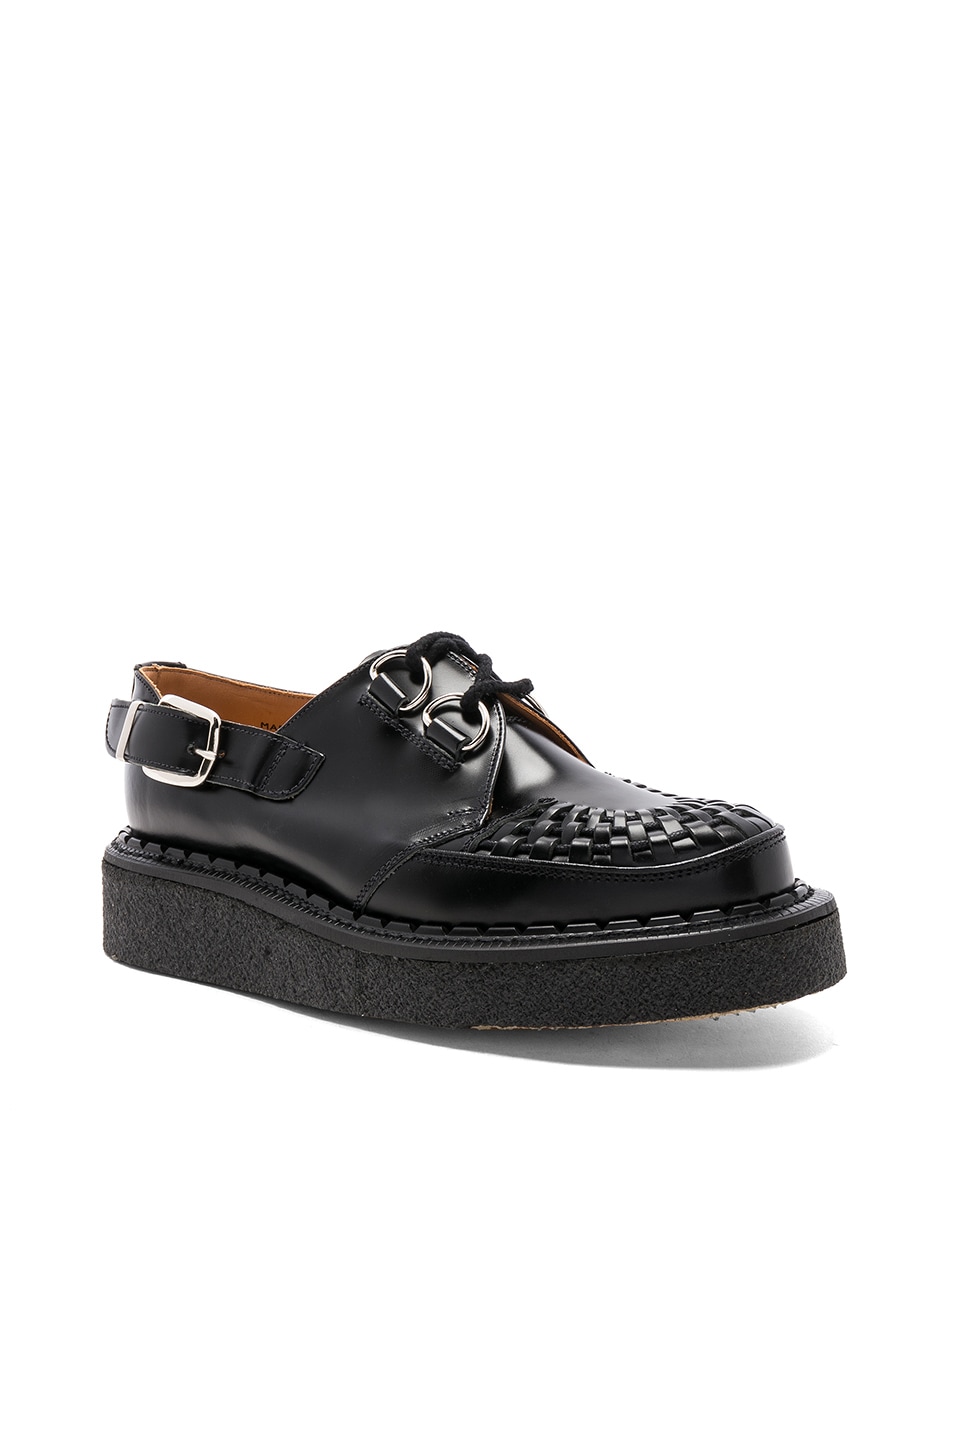 COMME des GARCONS Homme Plus Leather George Cox Shoes in Black | FWRD